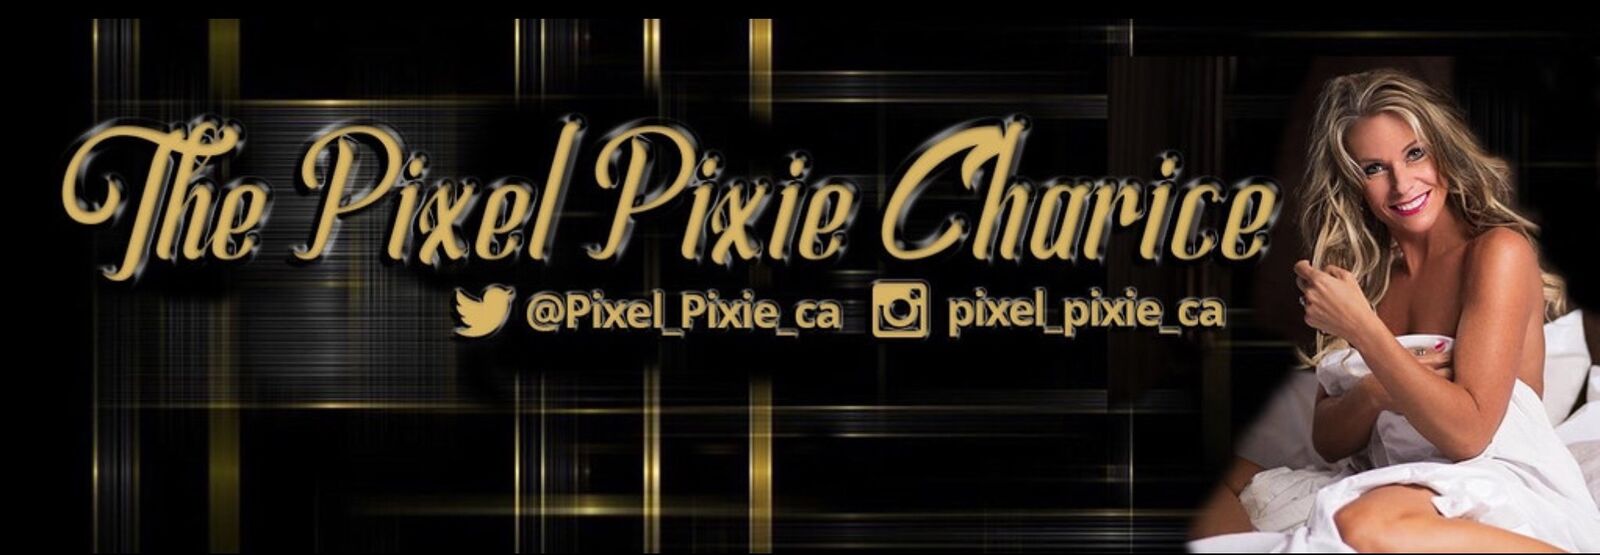 See pixel_pixie_ca_FREE profile